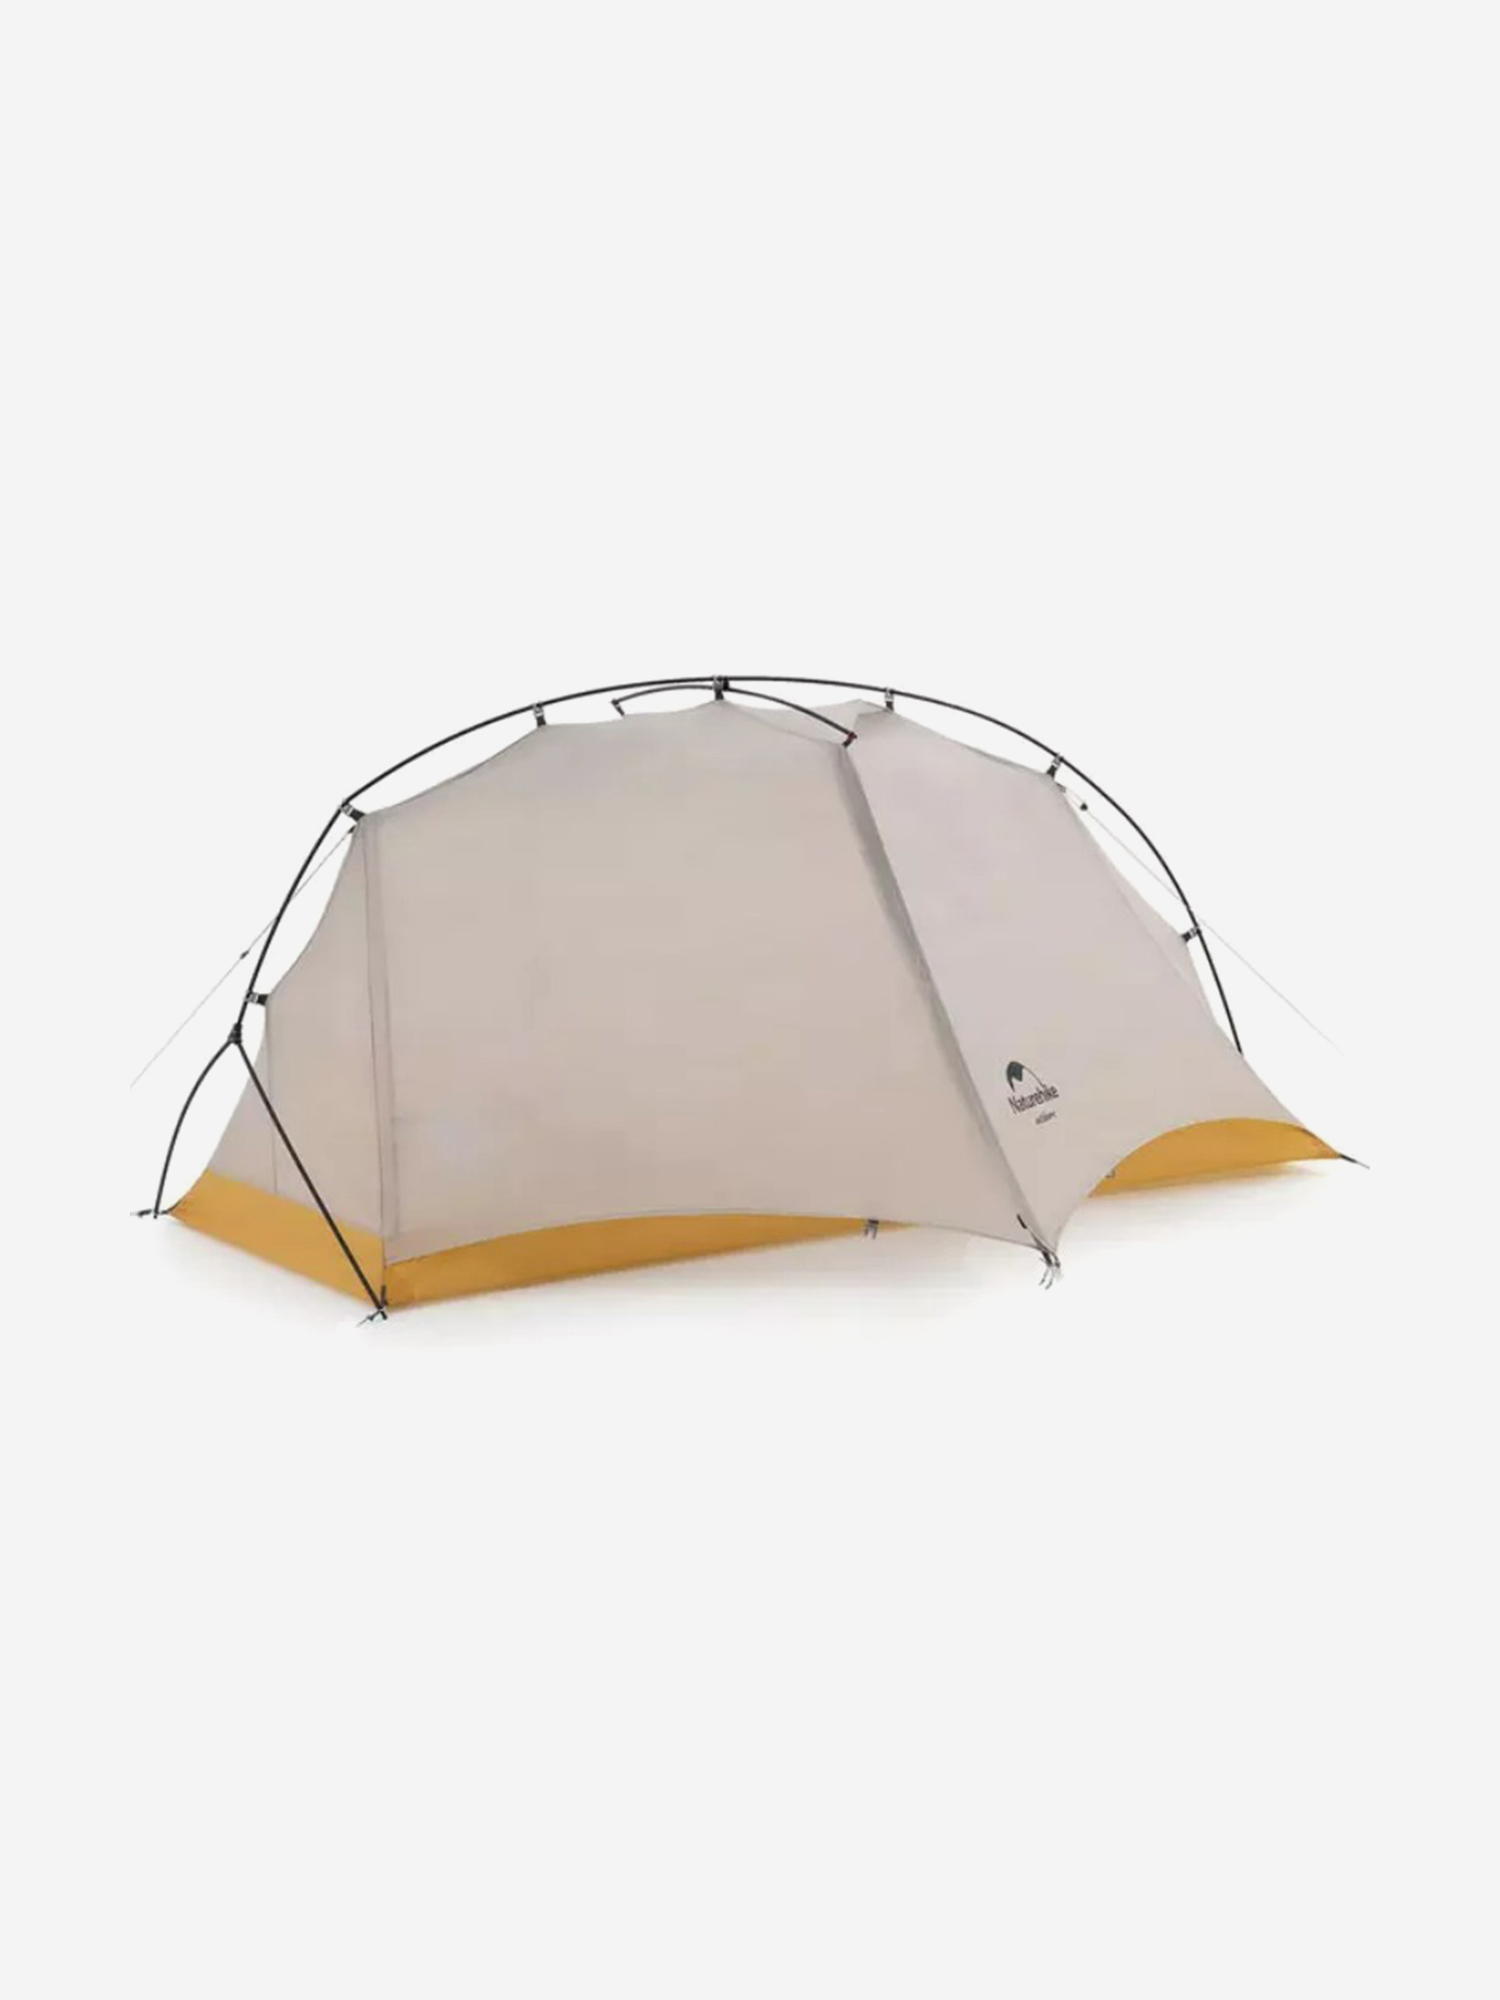 Палатка Naturehike Cloud Trace 1-местная, алюминиевый каркас, серо-желтый, Желтый палатка зимняя стэк elite 2 местная трёхслойная дышащая